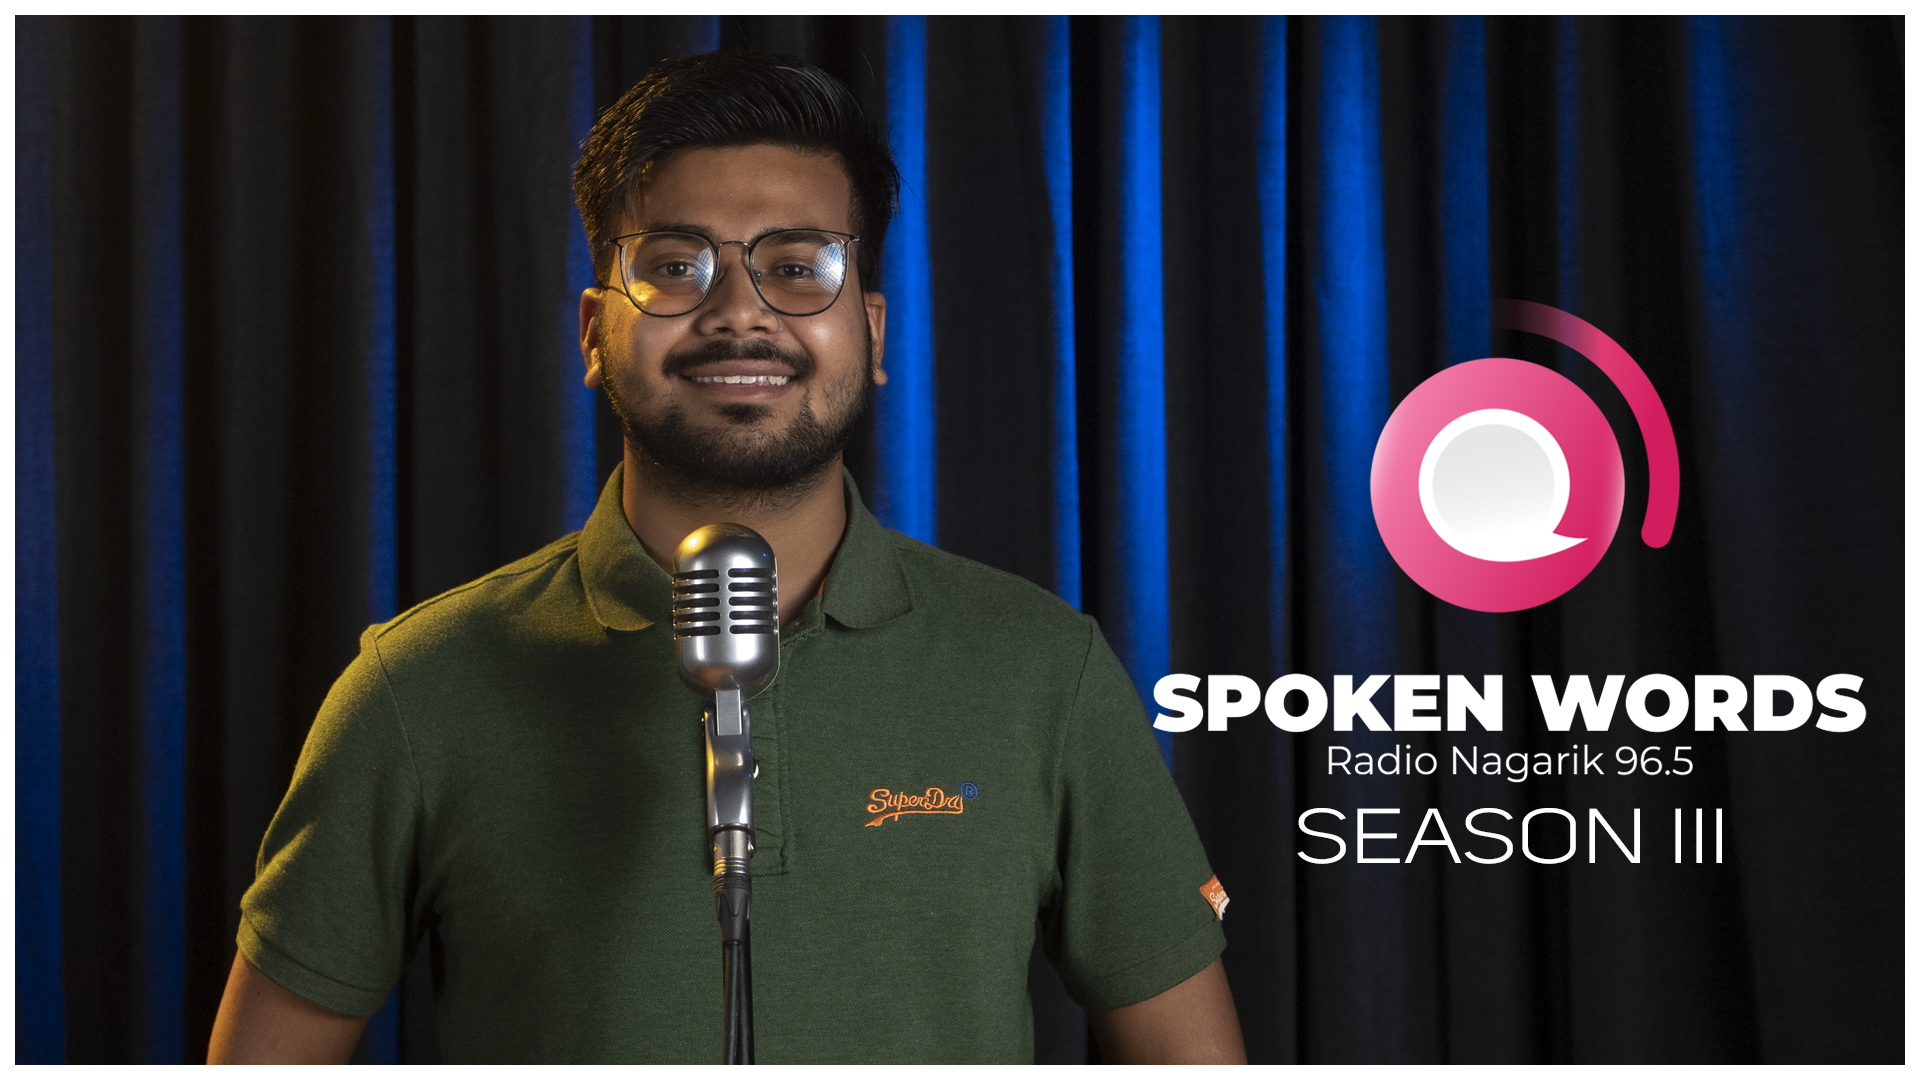 भावना तिमी नभए प्यार के गर्नु - Spoken Words Season 3 | Ritik Mishra